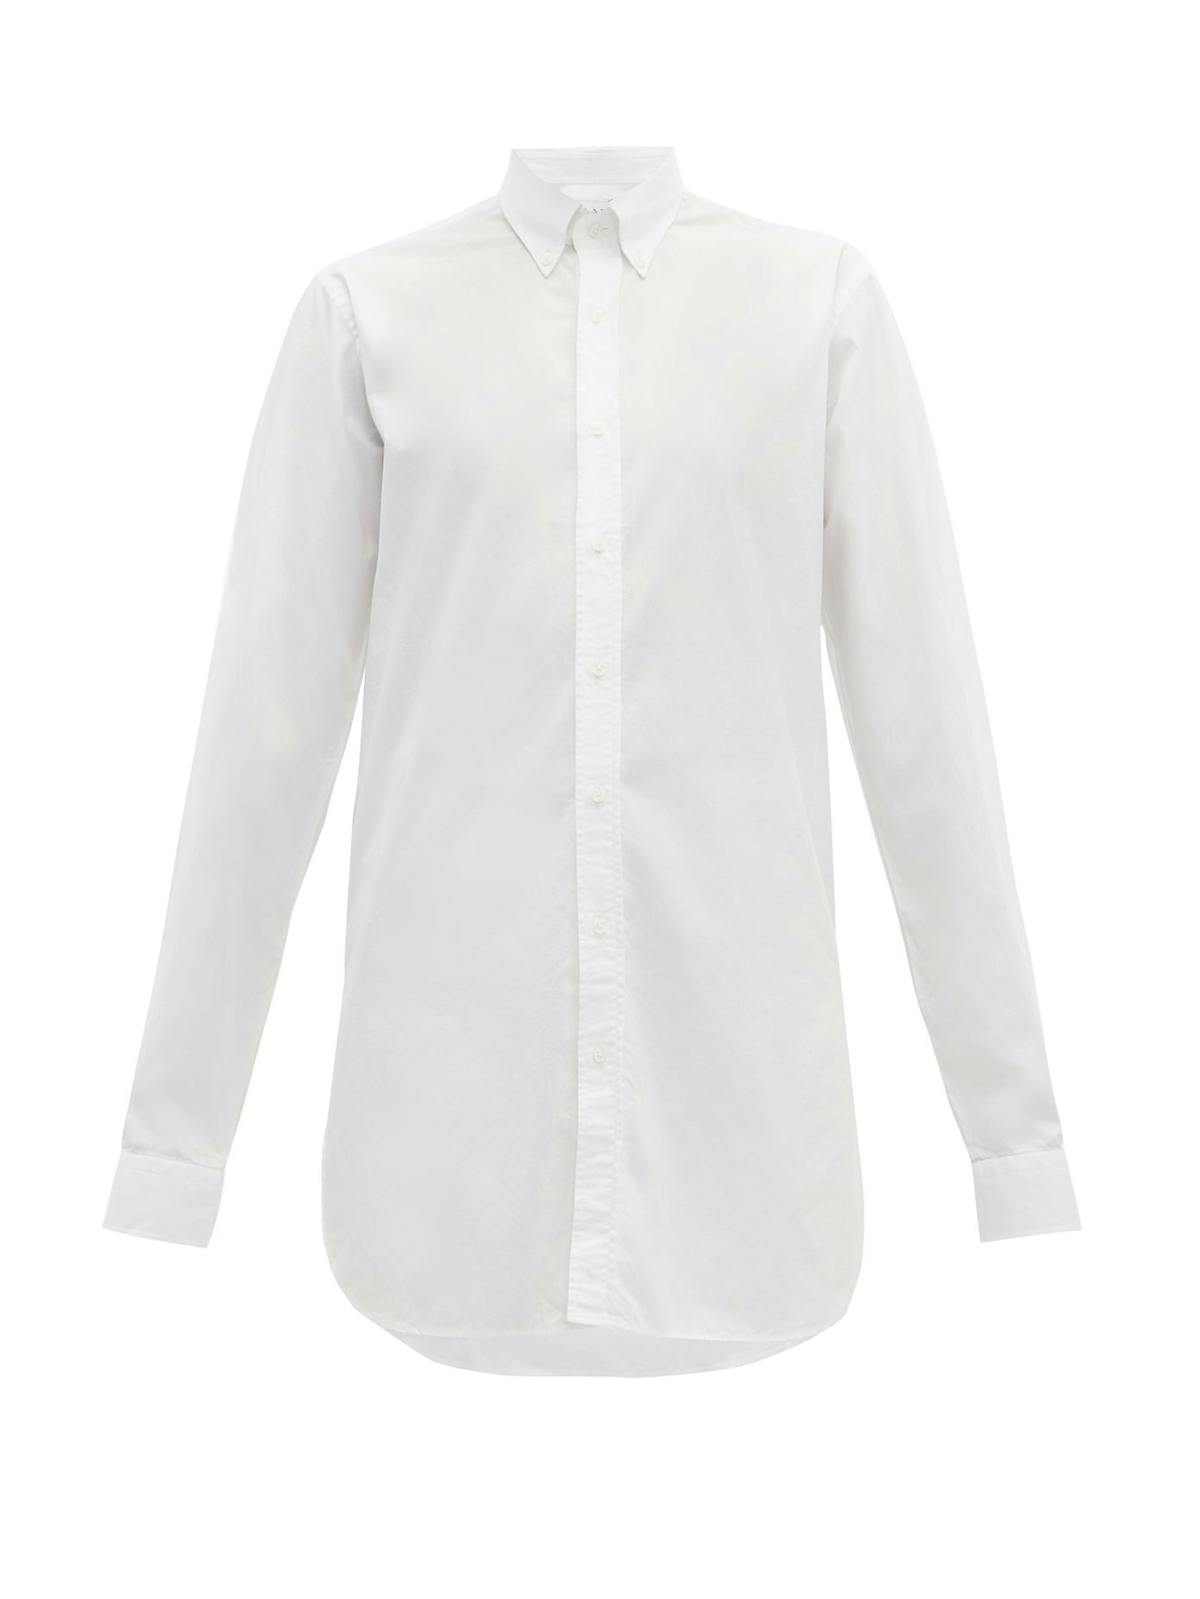 The best women's white shirts